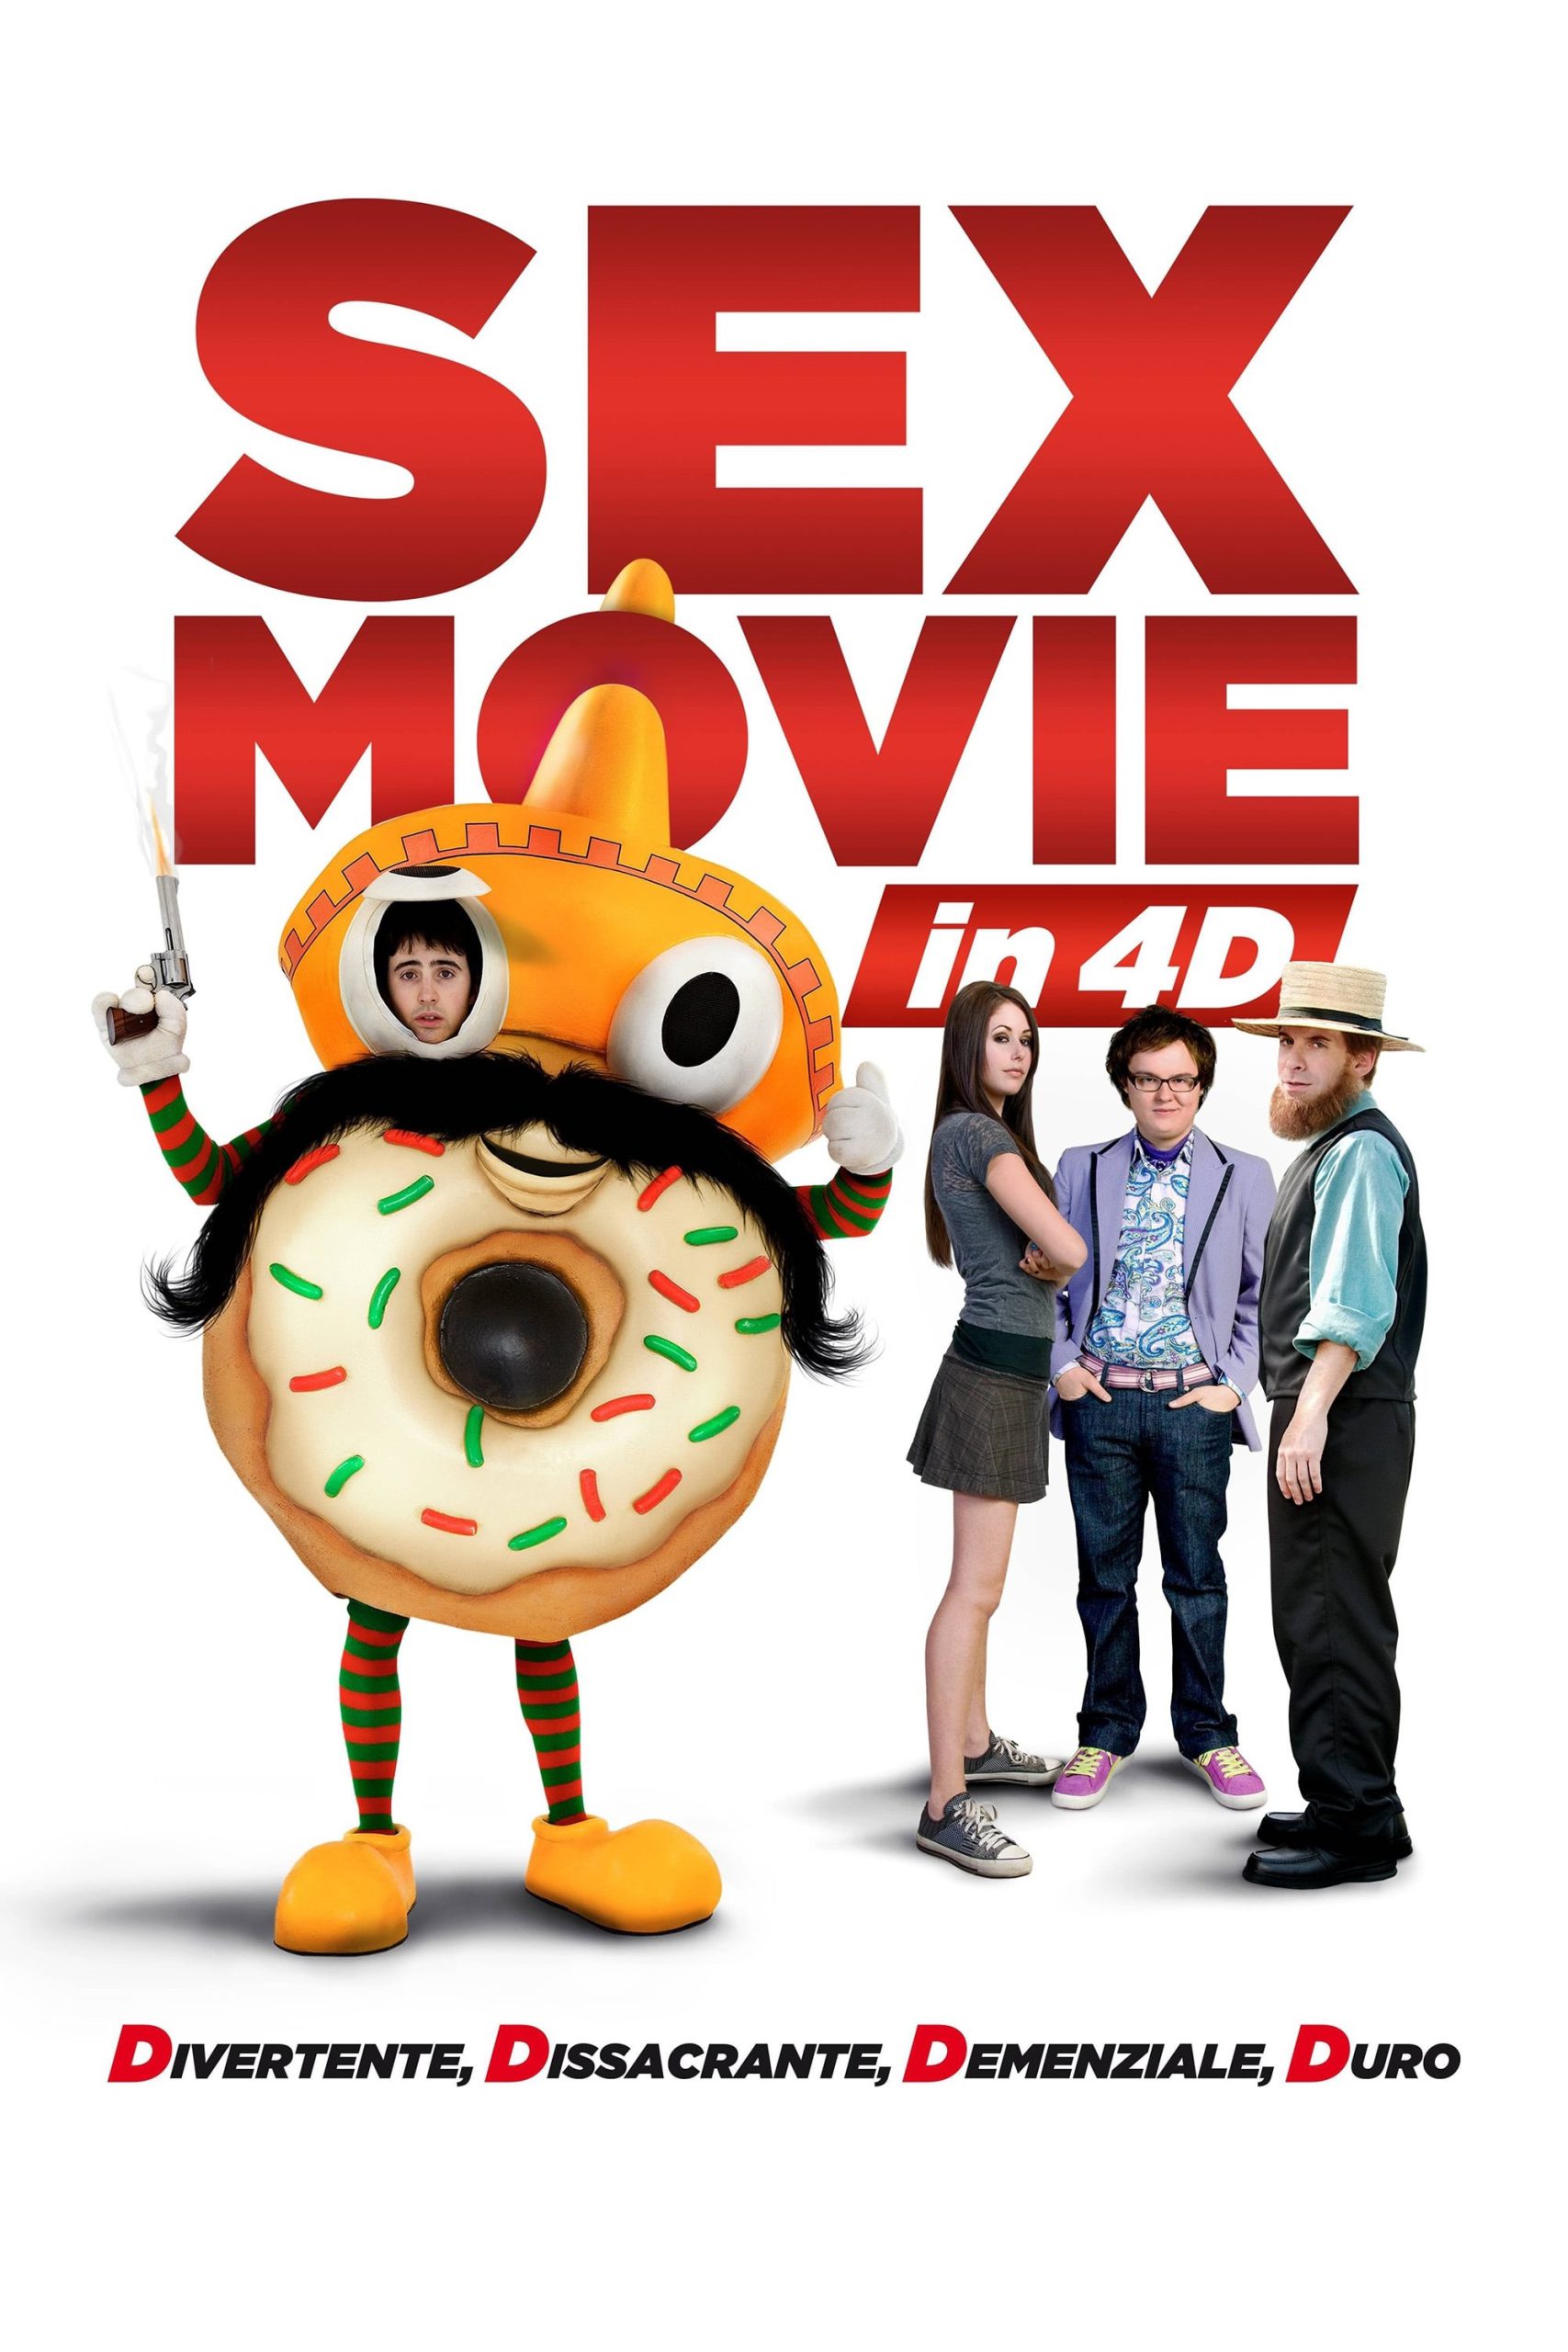 Sex Movie in 4D [HD] (2009)